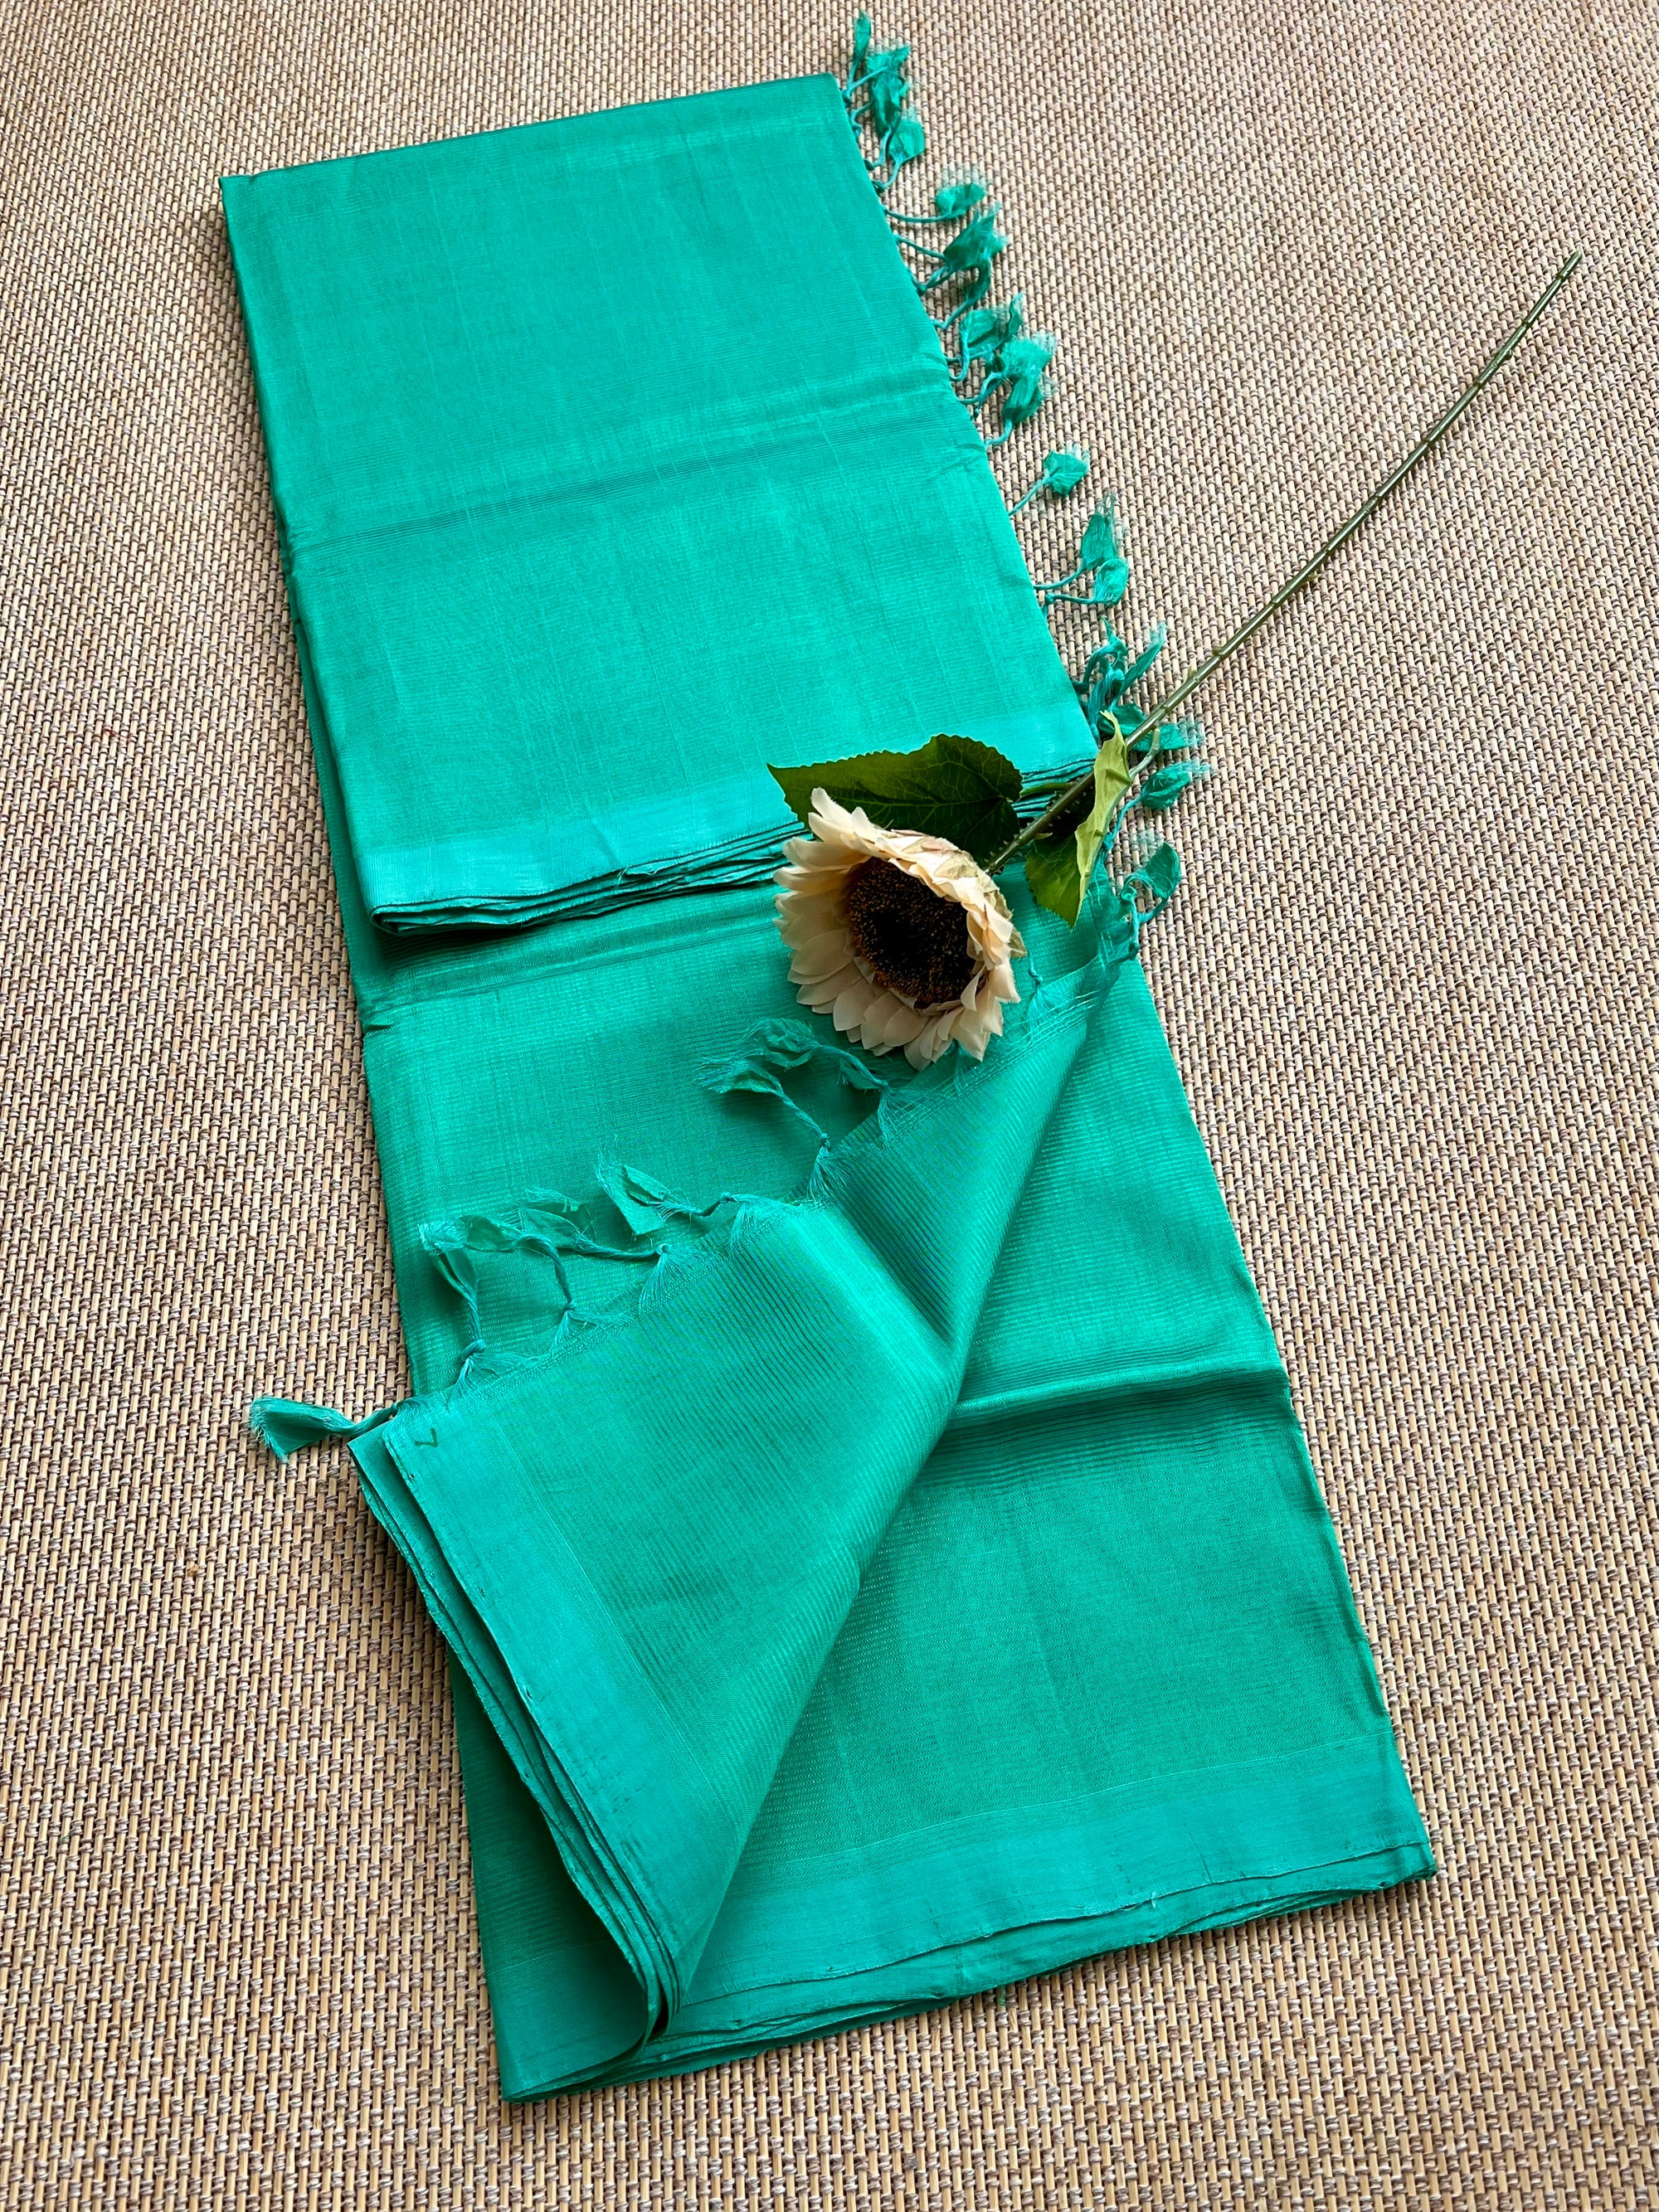 Handloom Mangalagiri  pattu by cotton